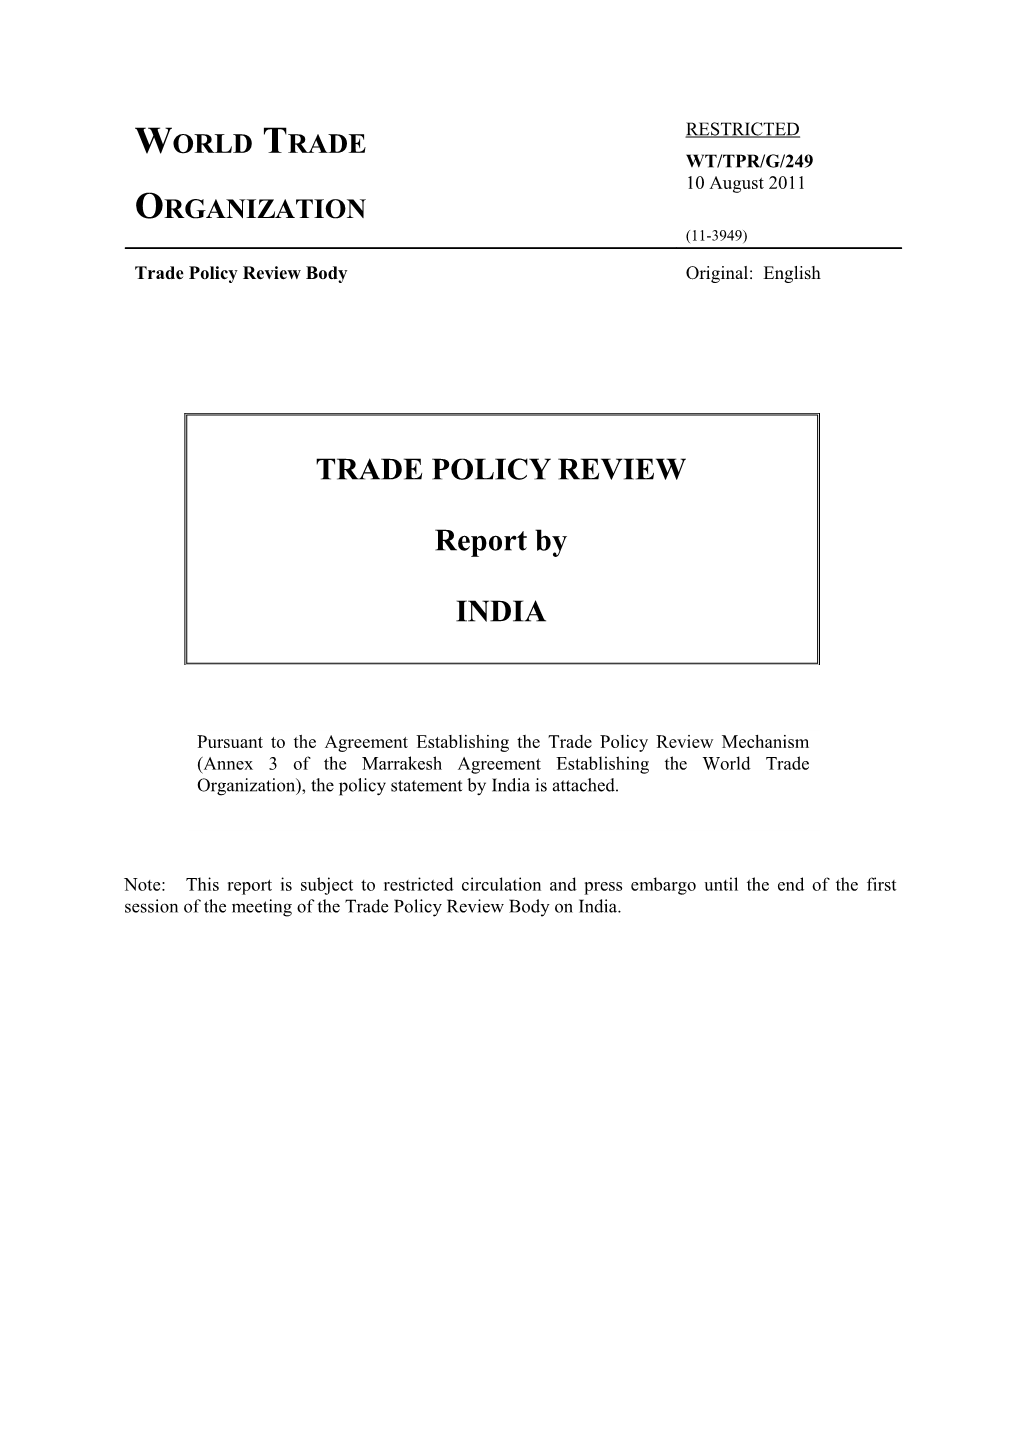 (3) Exports, Imports, and Trade Balance 7